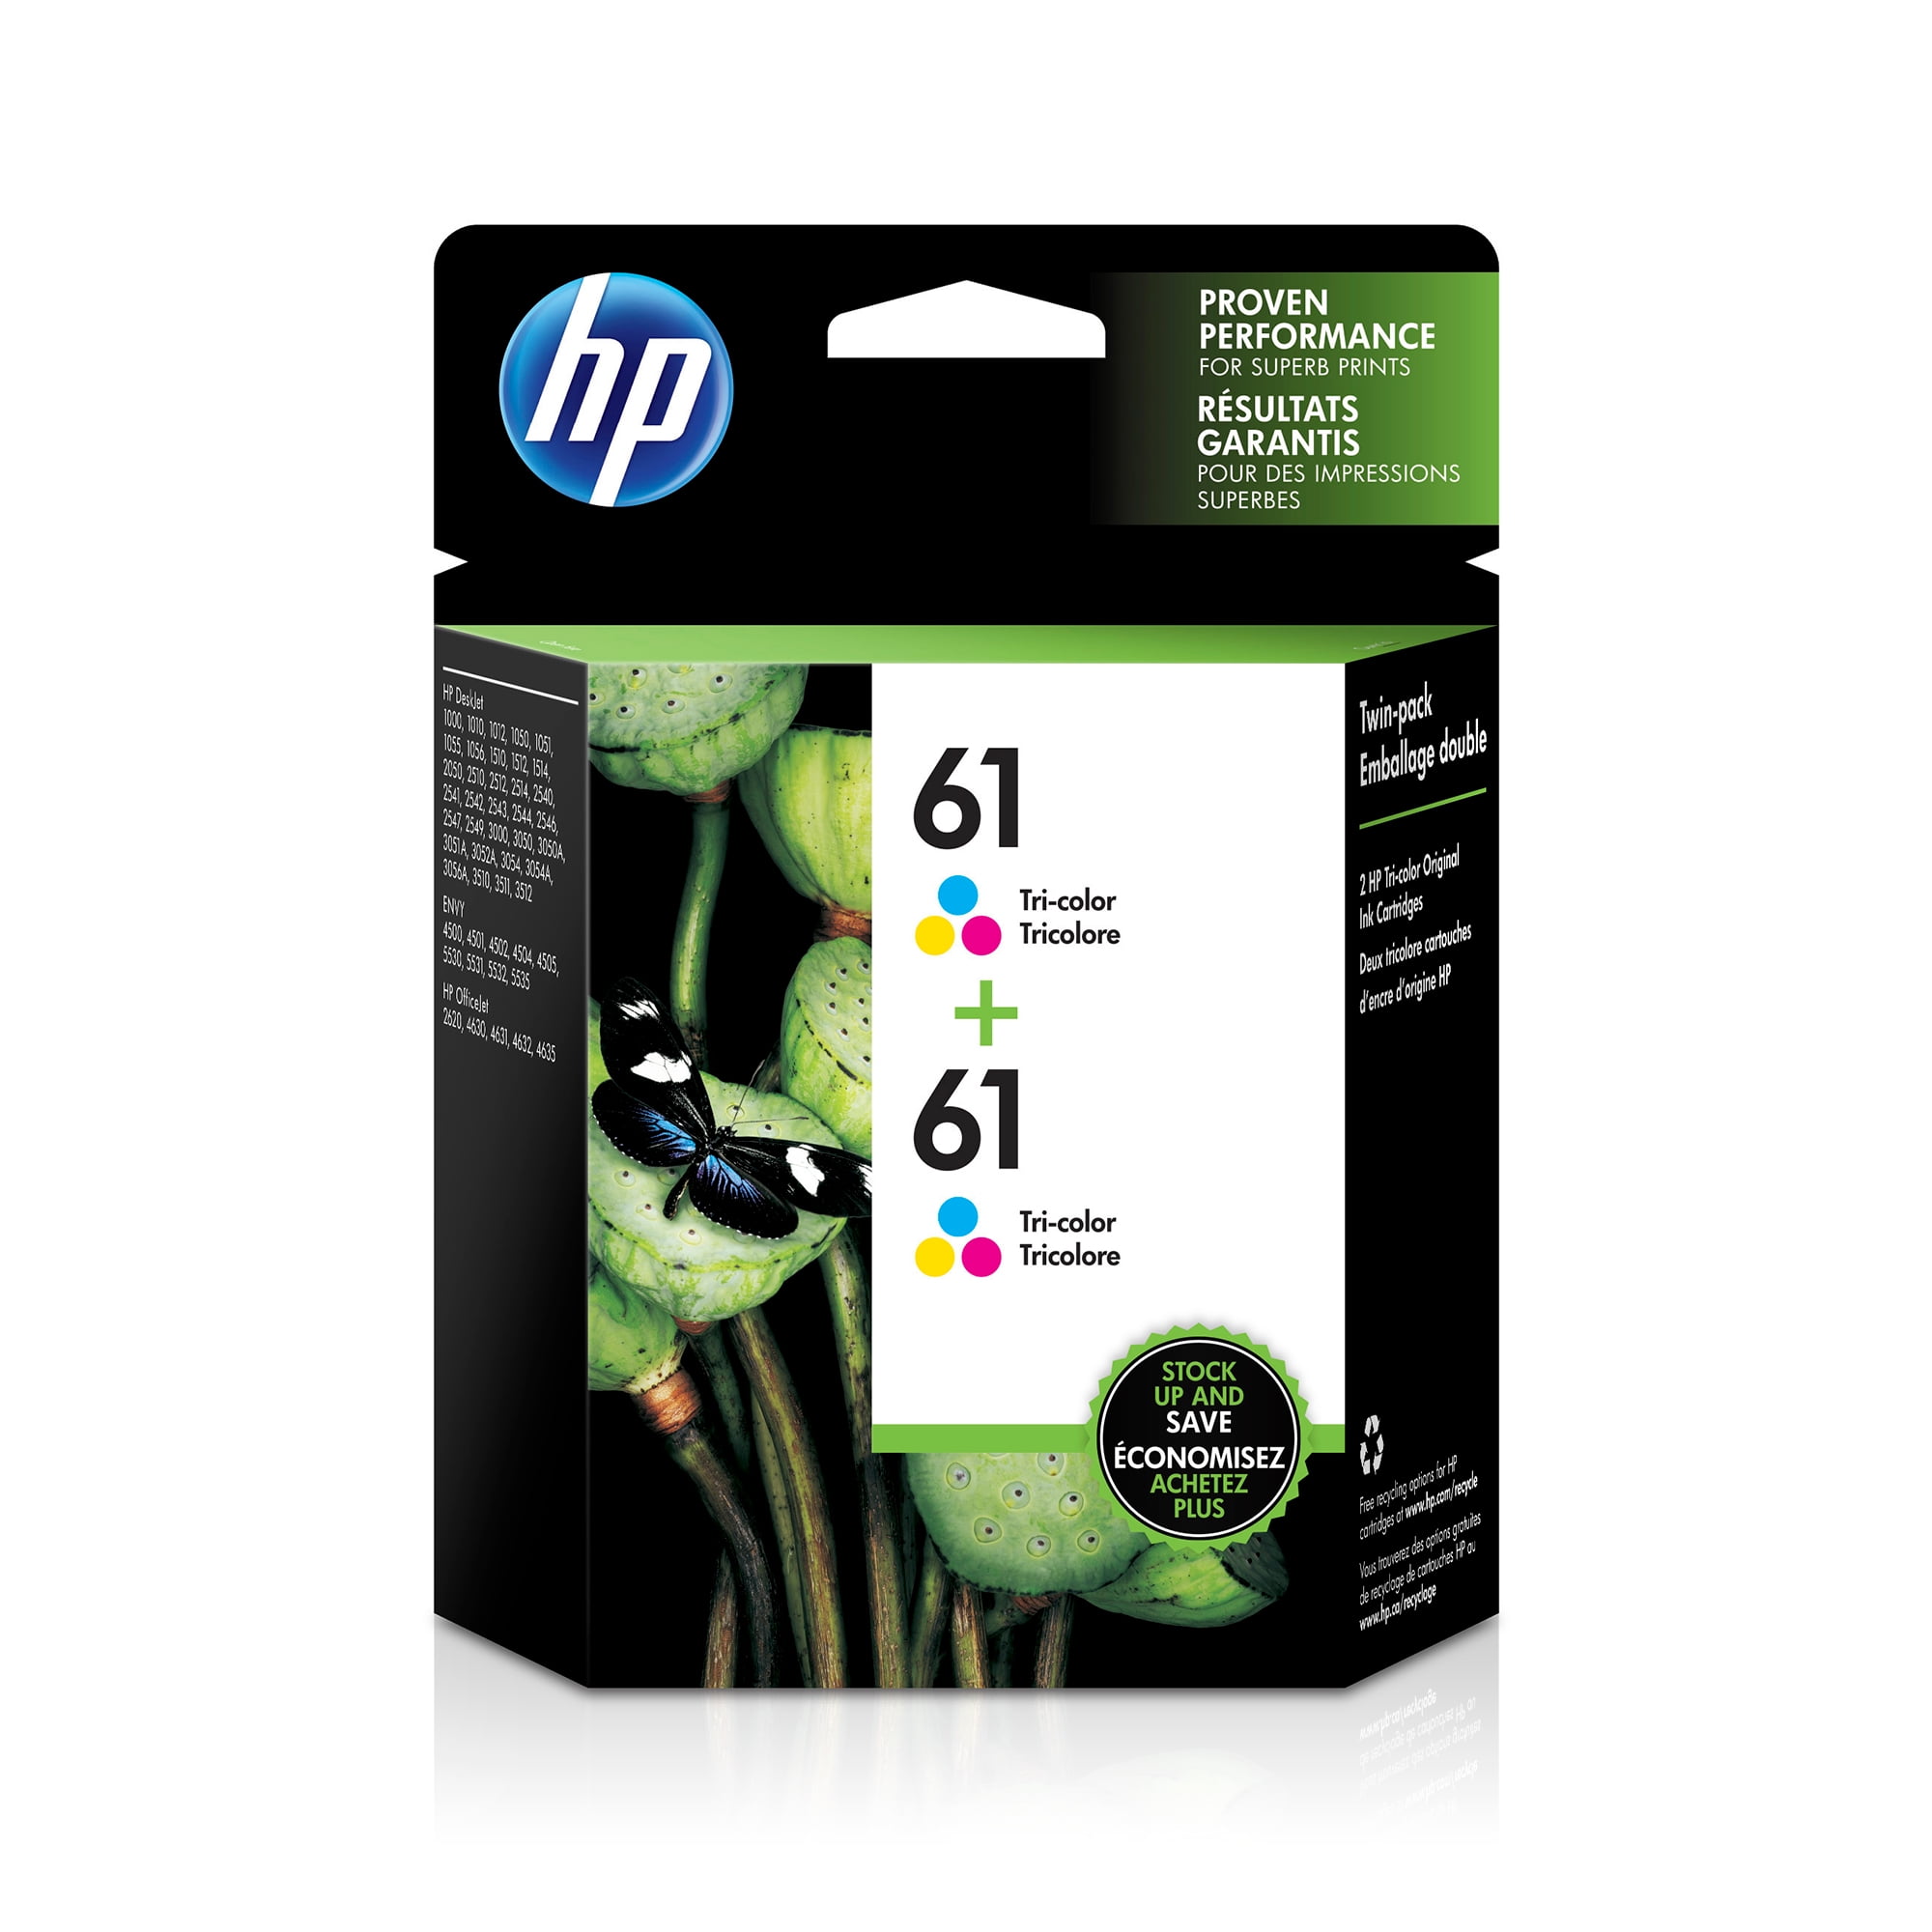 Combo-Pack exp 5/2020 Genuine HP 74+75 Ink Cartridges Black/Tri-color 